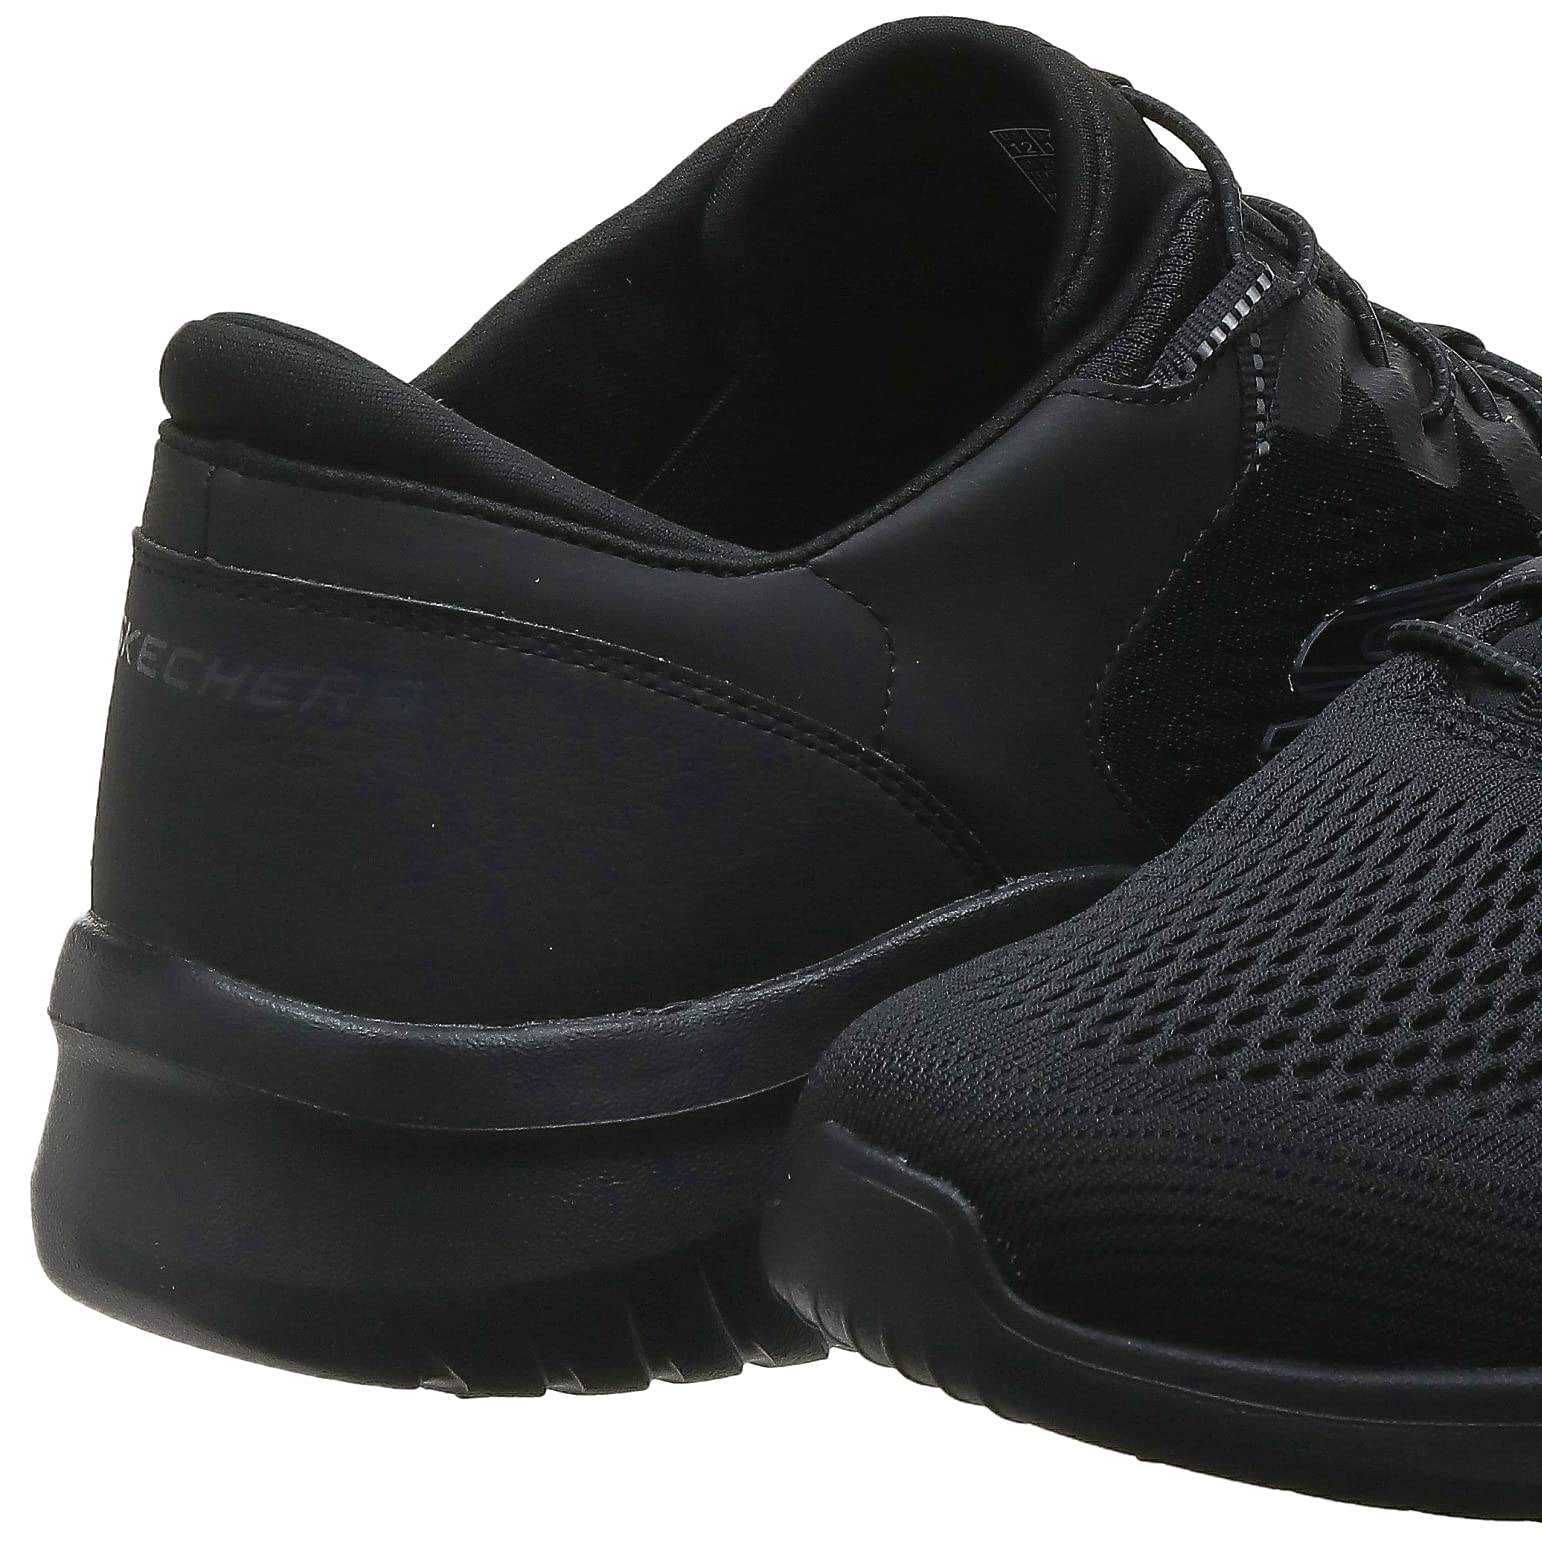 Skechers - Mens Ultra Flex 2.0 Running Walking Shoes Sneakers - Kerlem ...